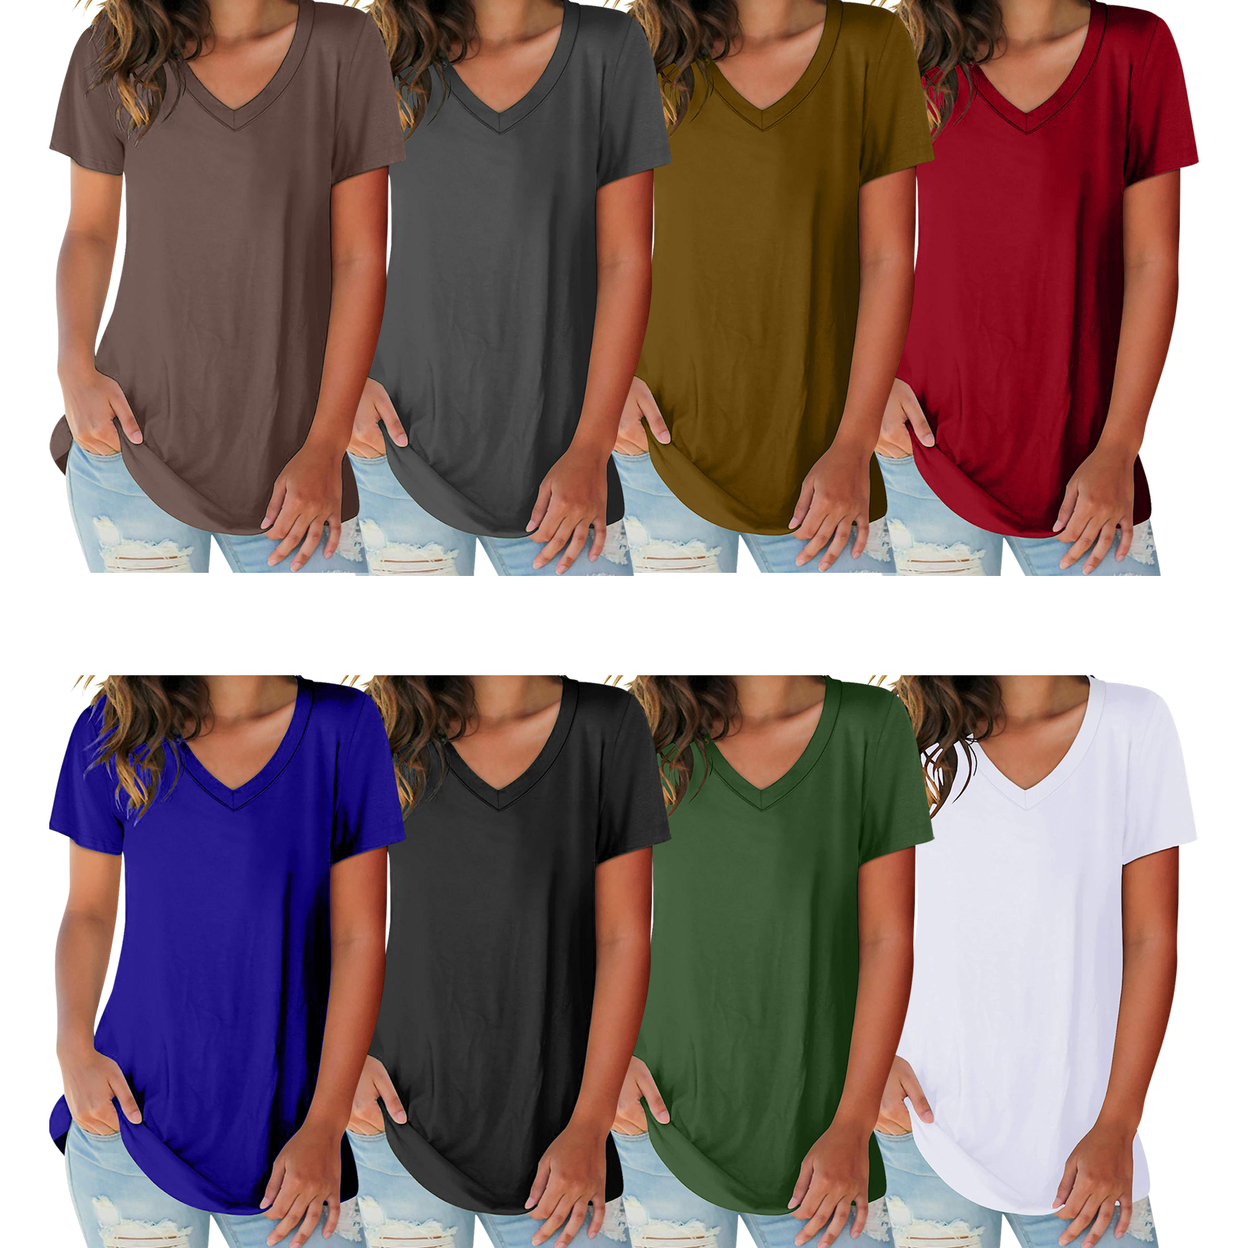 2-Pack: Women's Ultra Soft Smooth Cotton Blend Basic V-Neck Short Sleeve Shirts - Navy & Mustard, Small